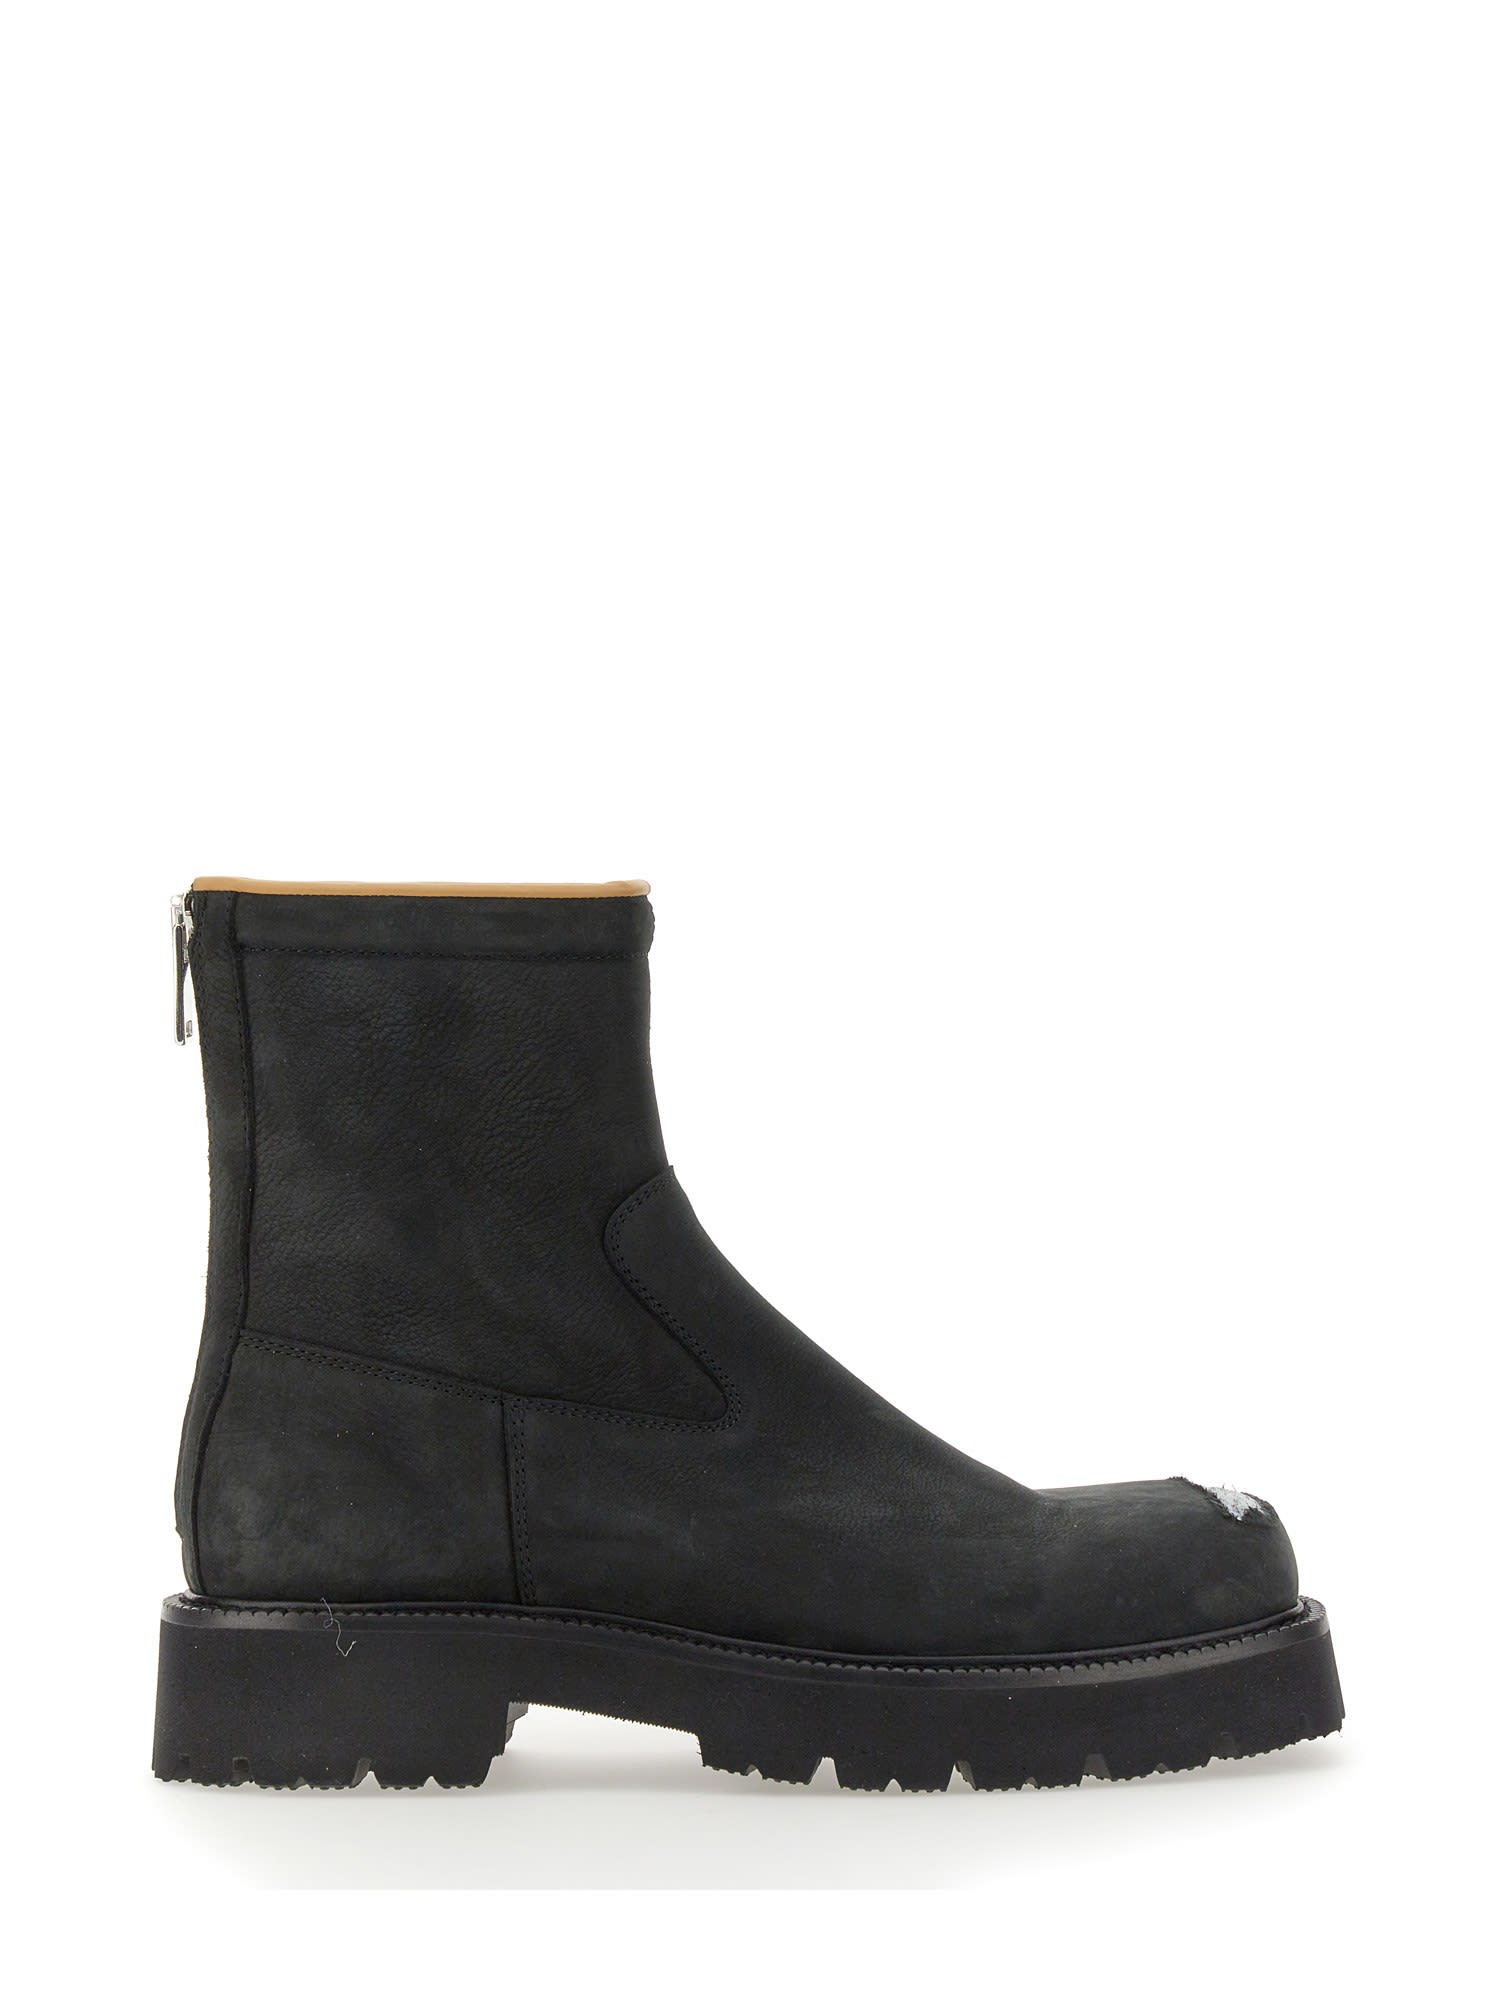 MM6 Maison Margiela Leather Boot